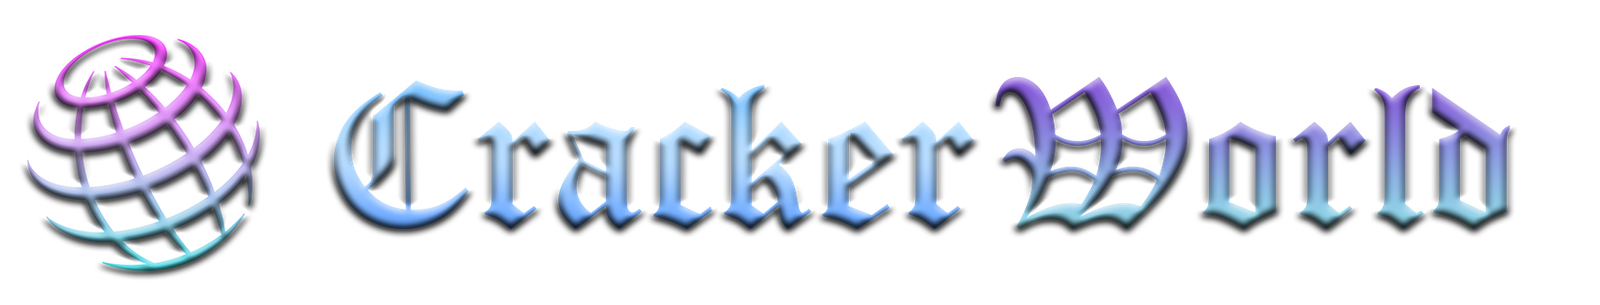 crackerworld site logo